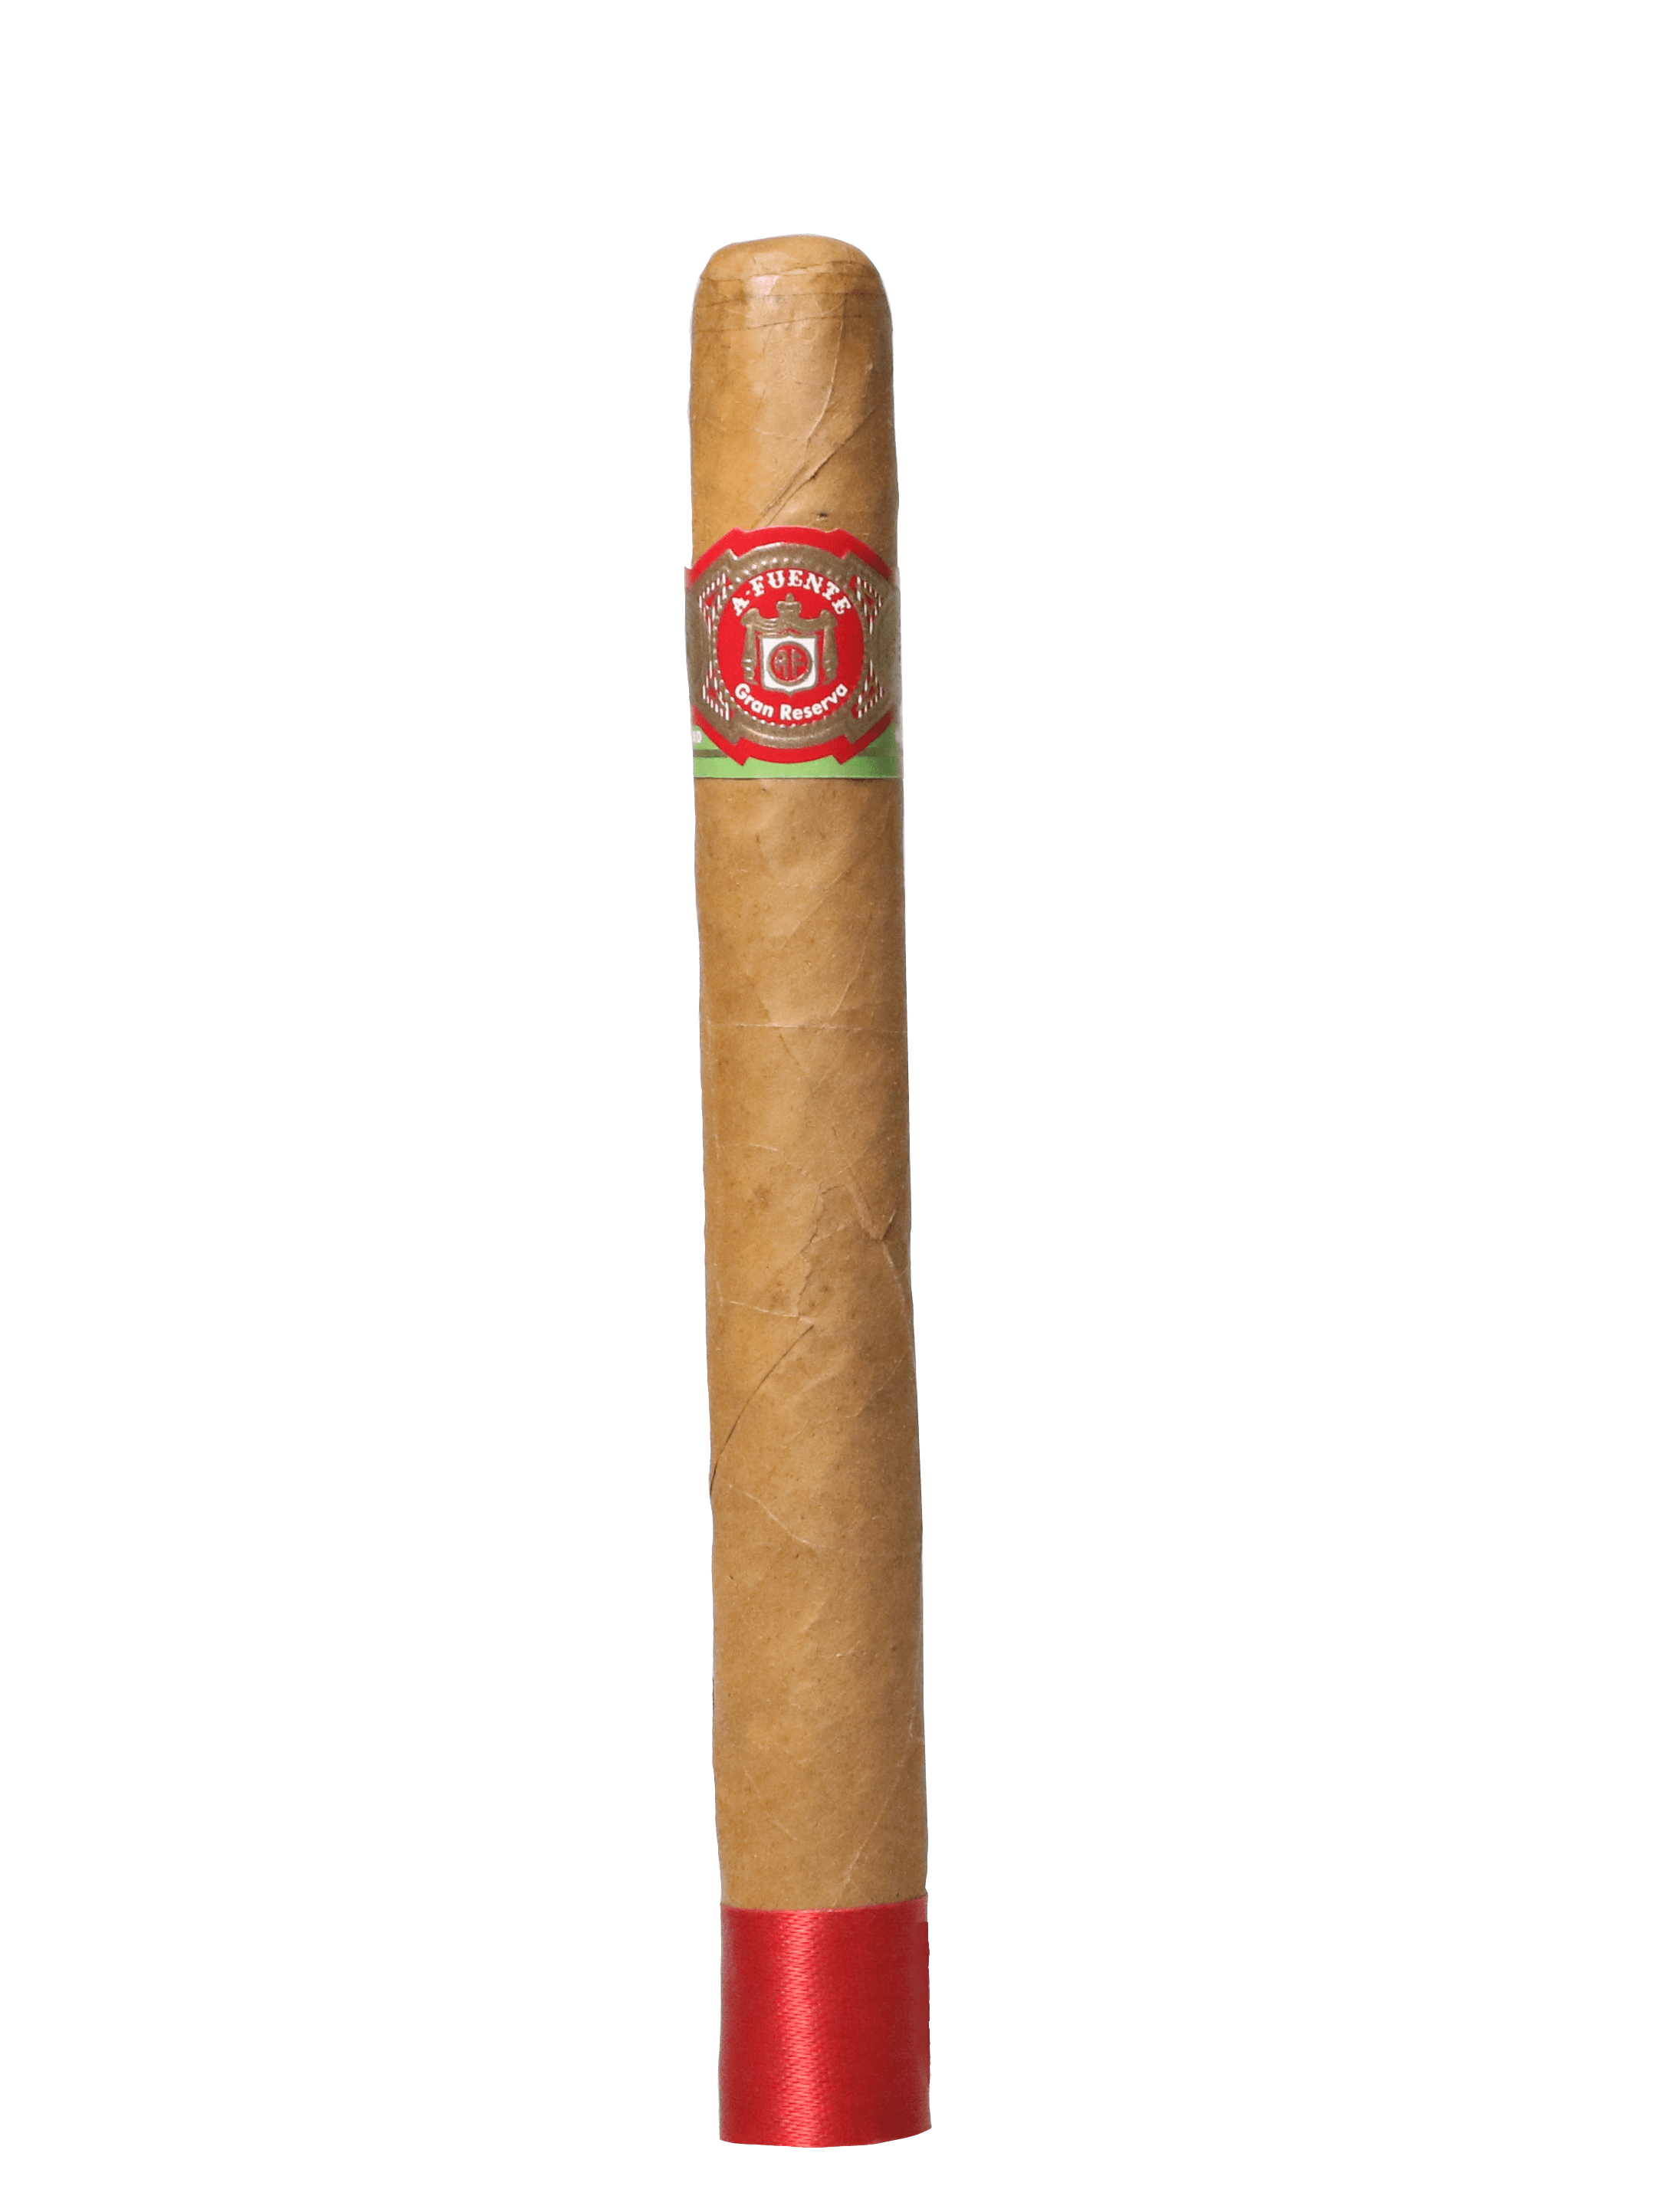 single arturo fuente chateau king t cigar